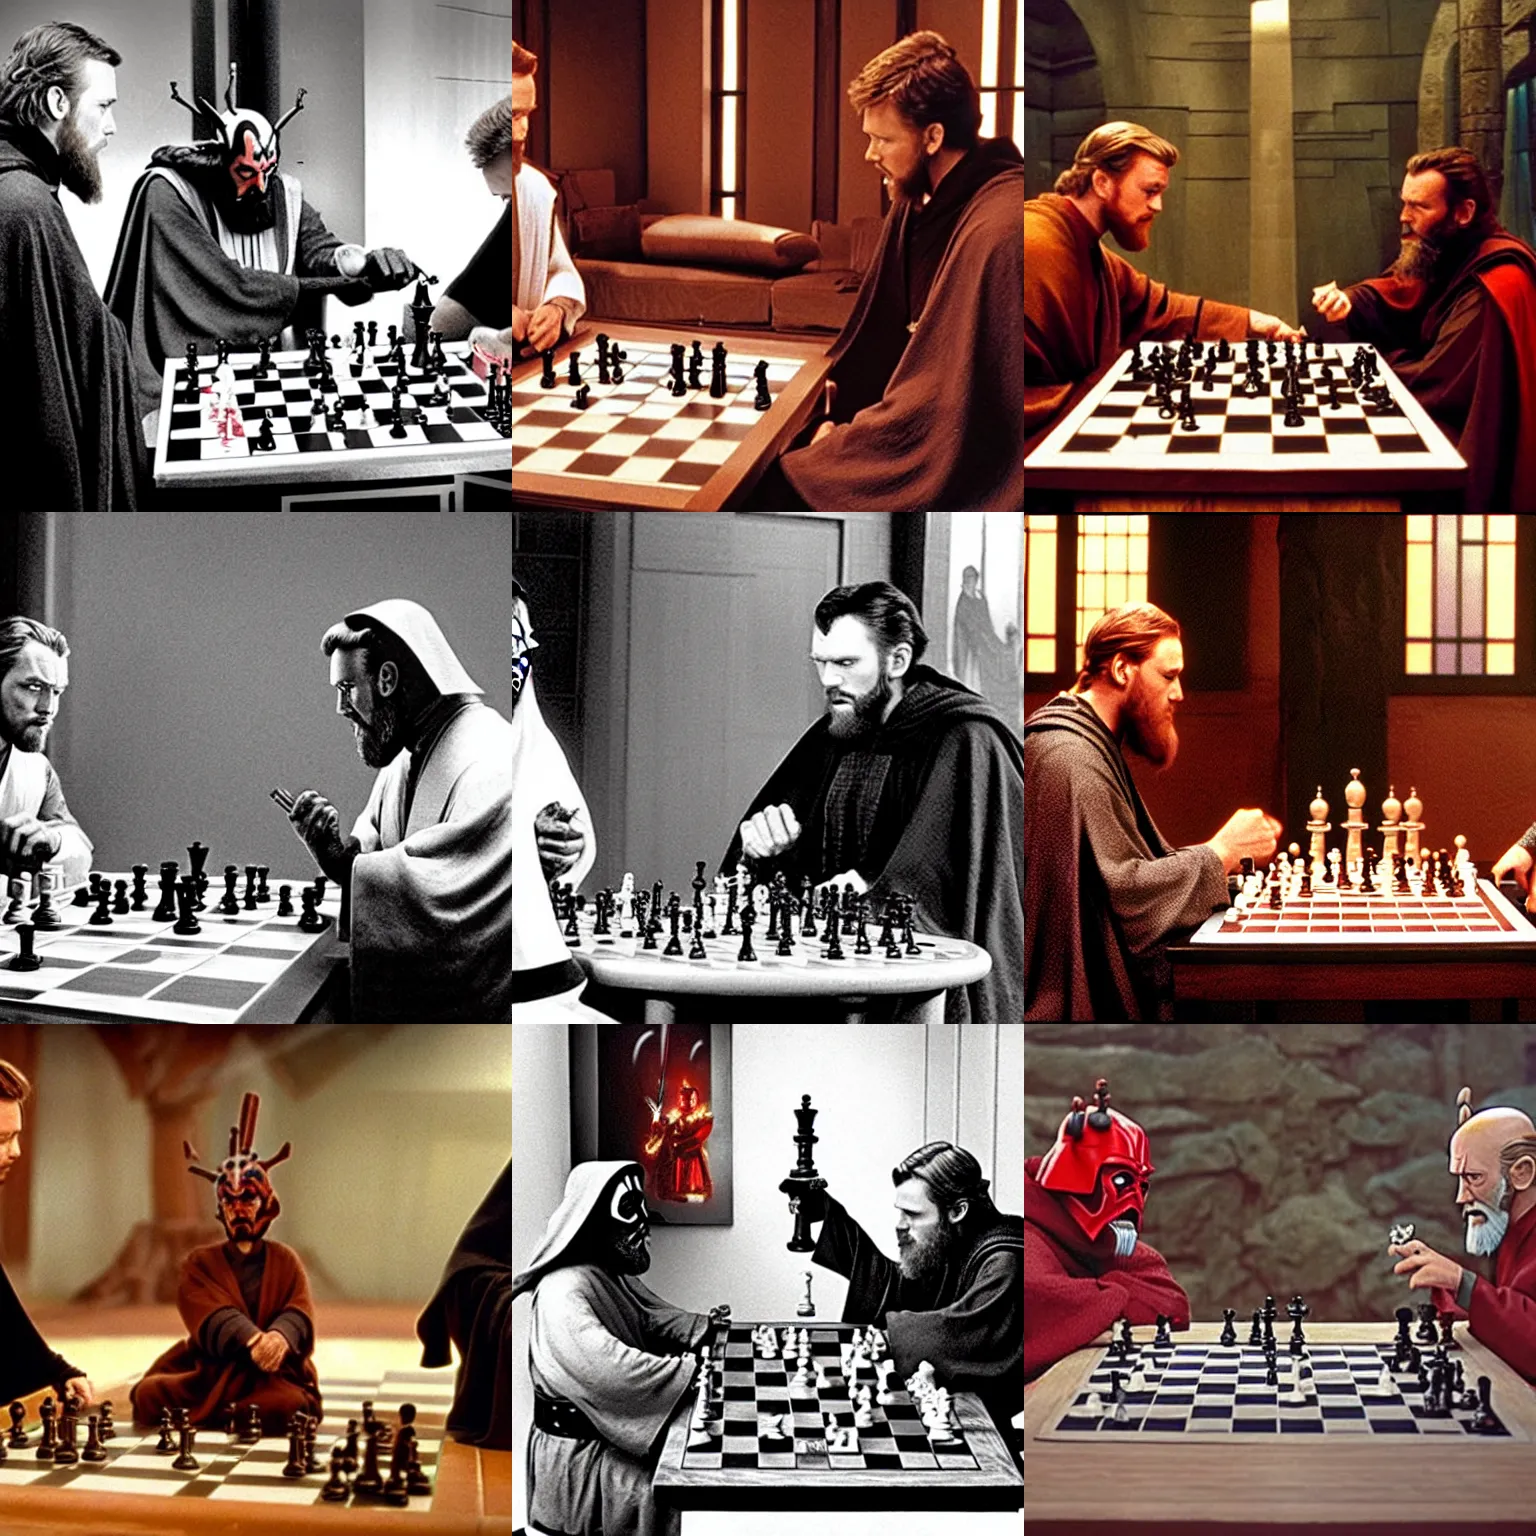 Prompt: obi - wan kenobi and darth maul playing chess, movie still